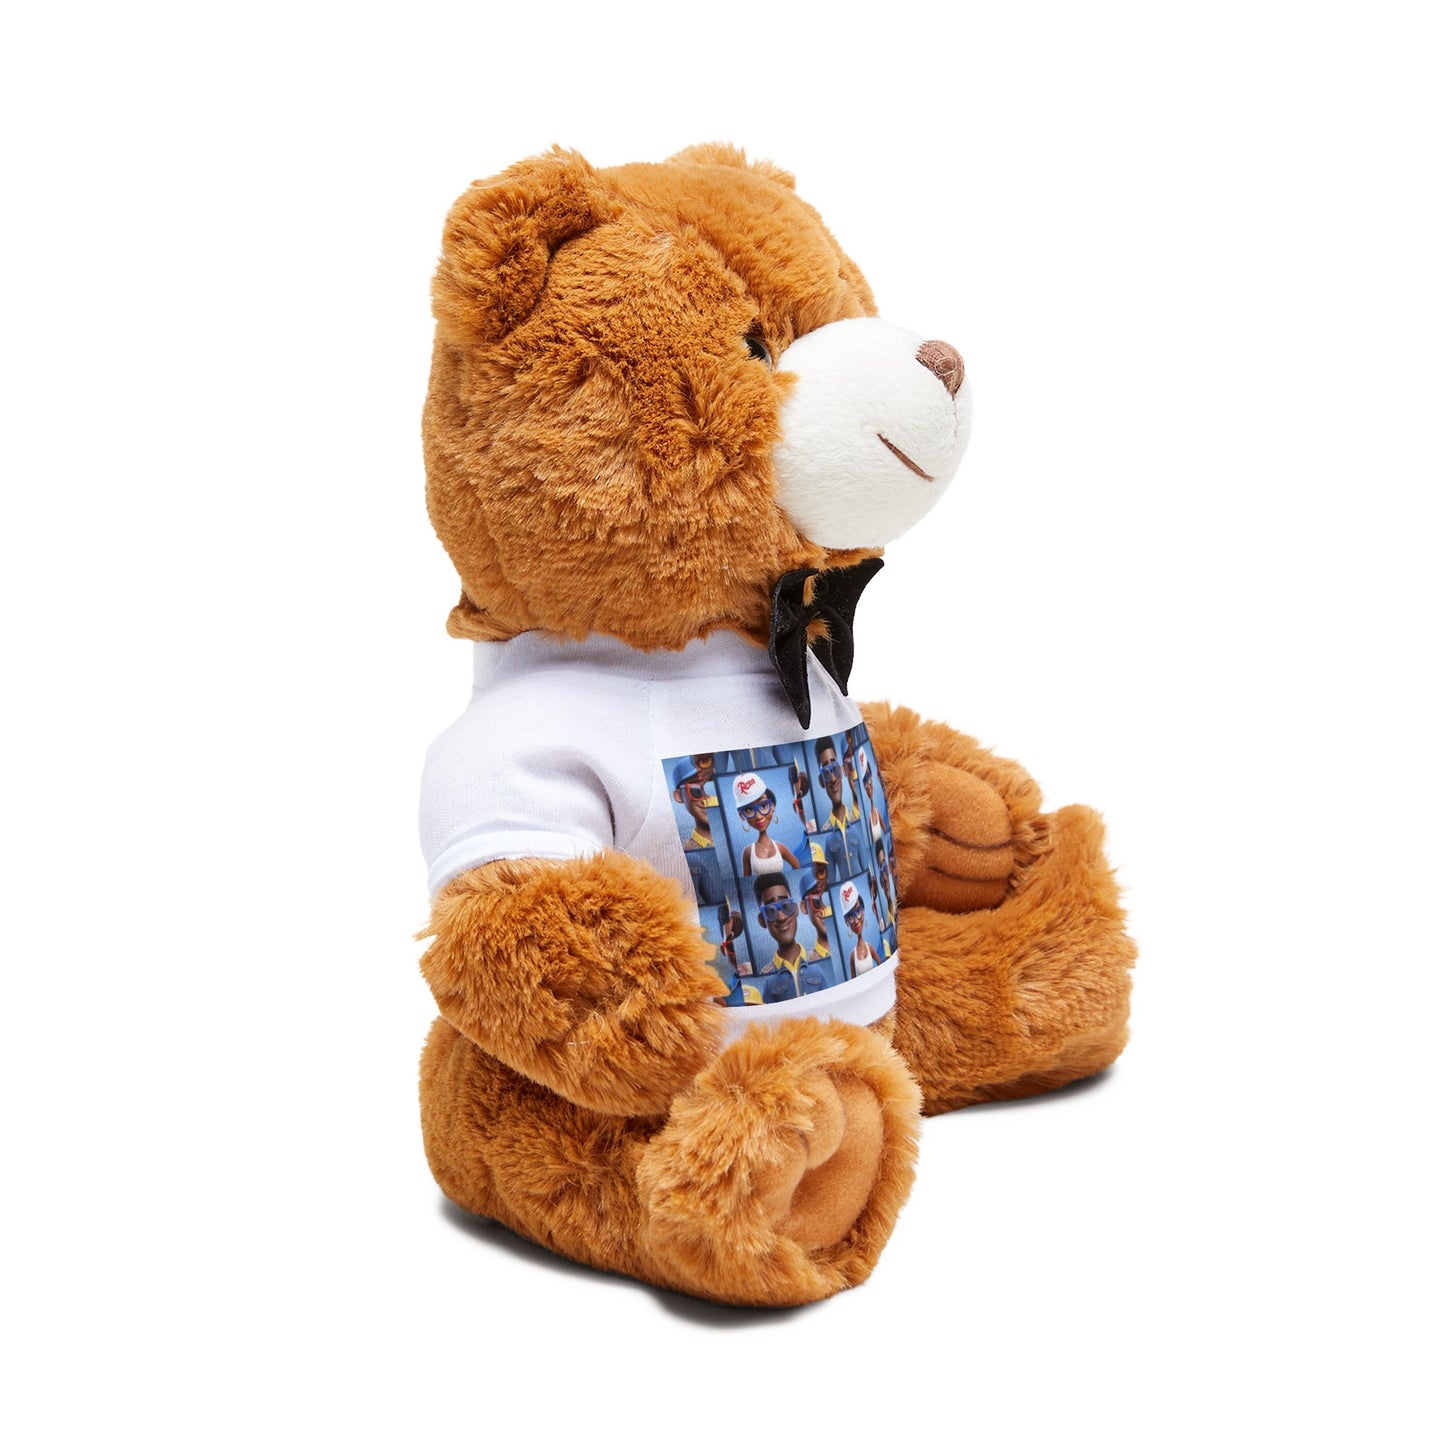 R&RH Teddy Bear with Caricatures T-Shirt